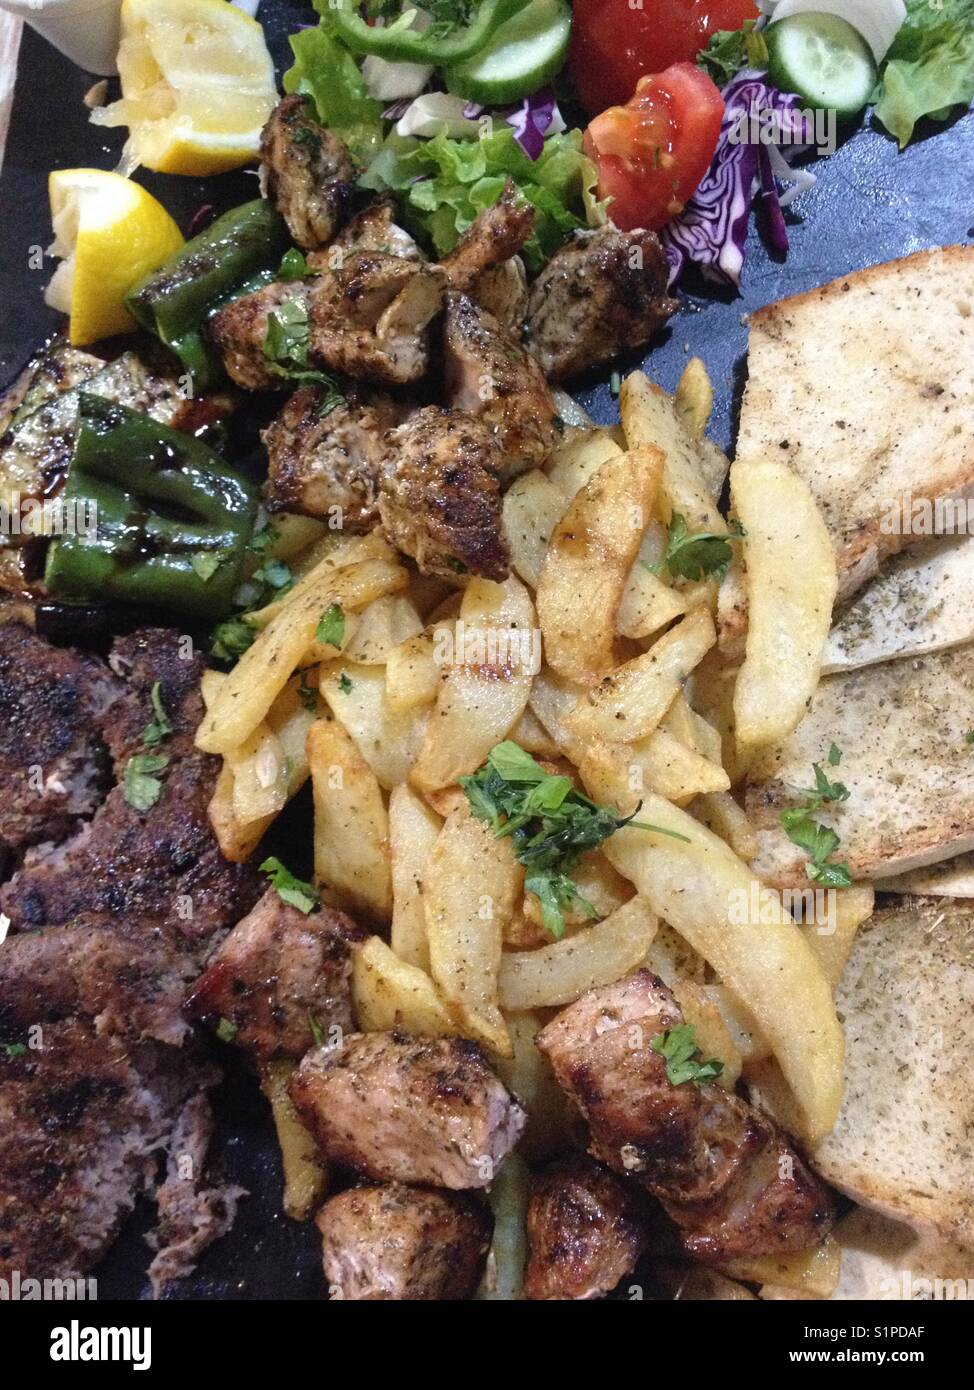 greek mixed grill at a tavern Stock Photo